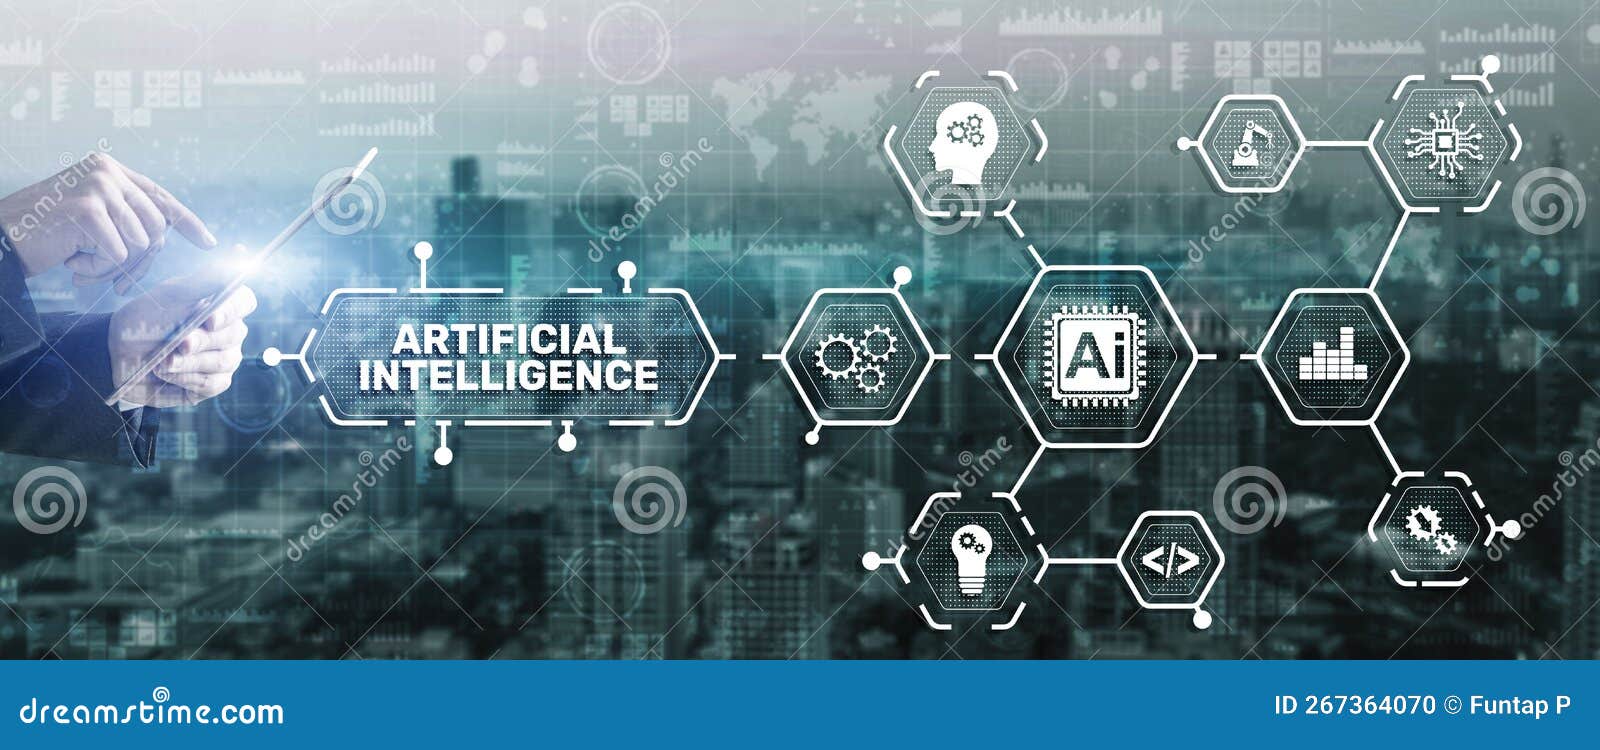 artificial intelligence nanotechnologies business technologies concept. futuristic background